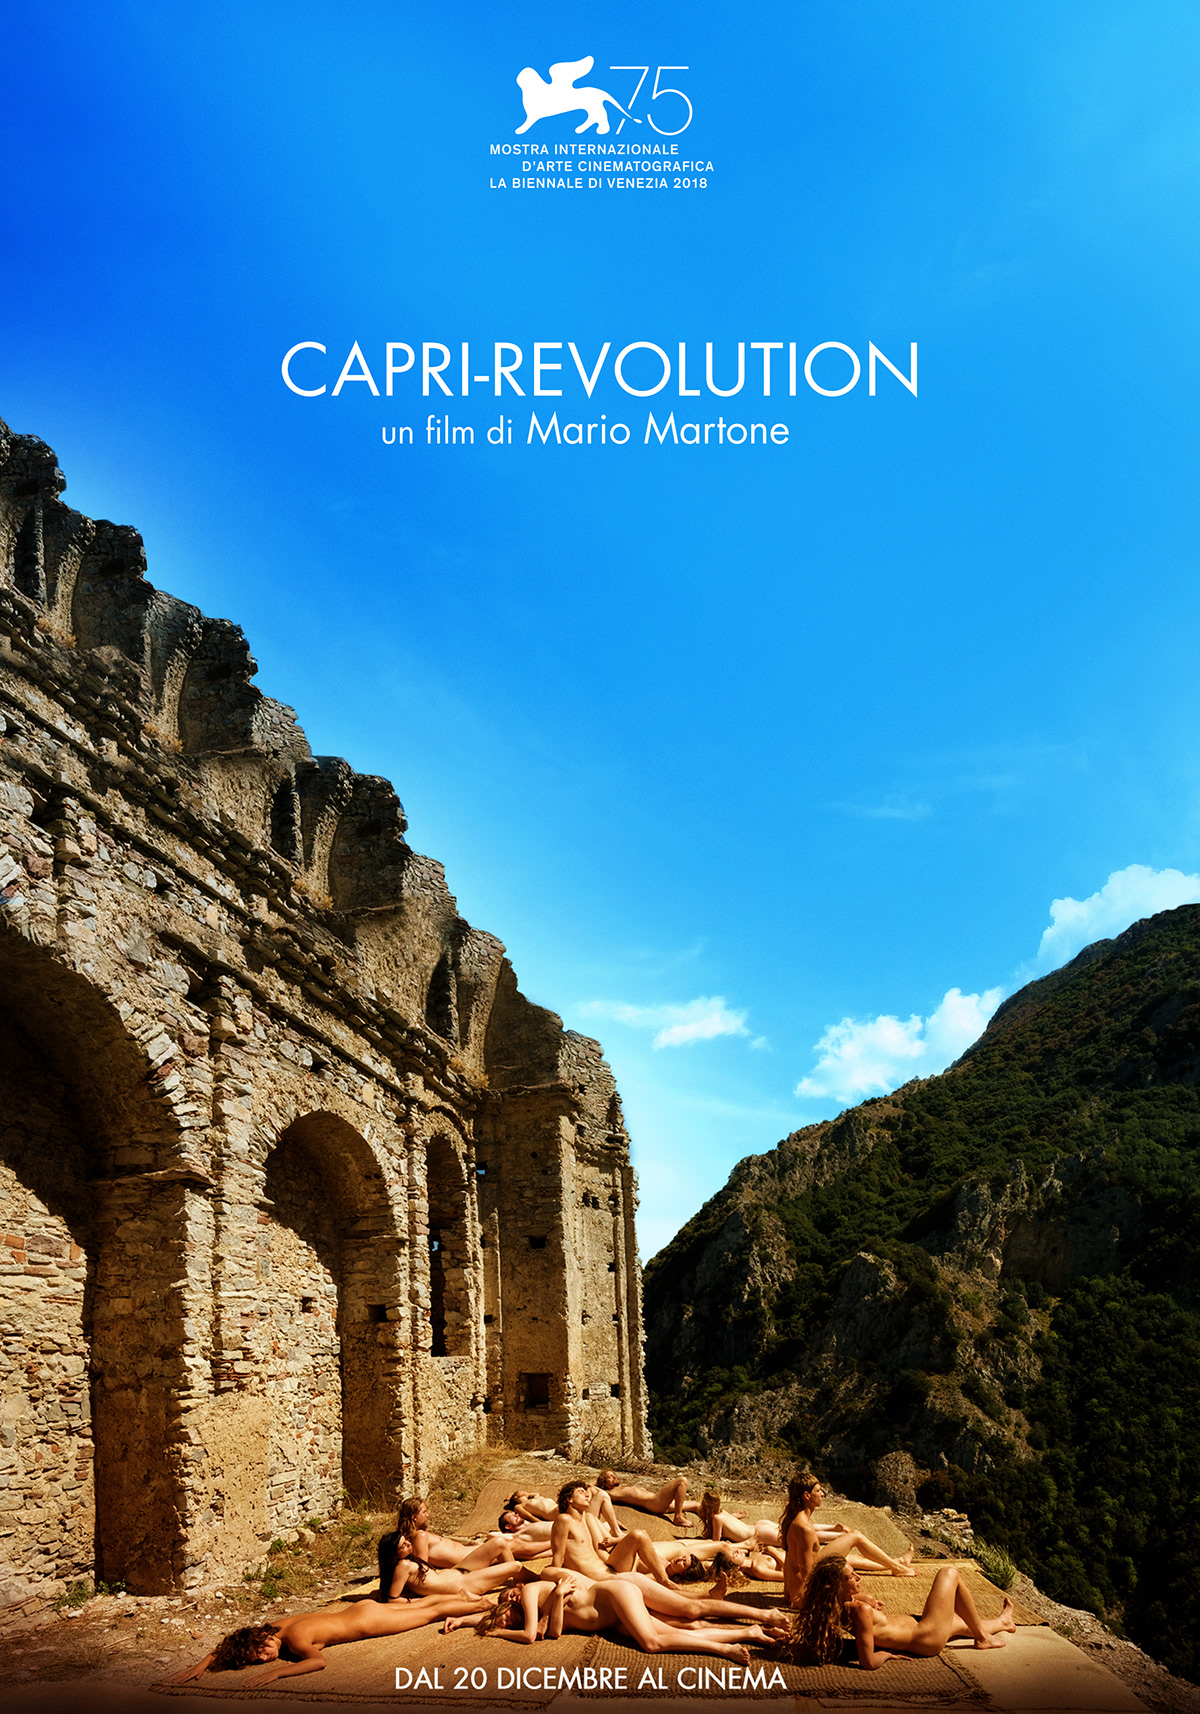 Capri revolution Mario Martone 01distribution Cinema Marketing cinematografico trailer poster Film   keyart manifesto